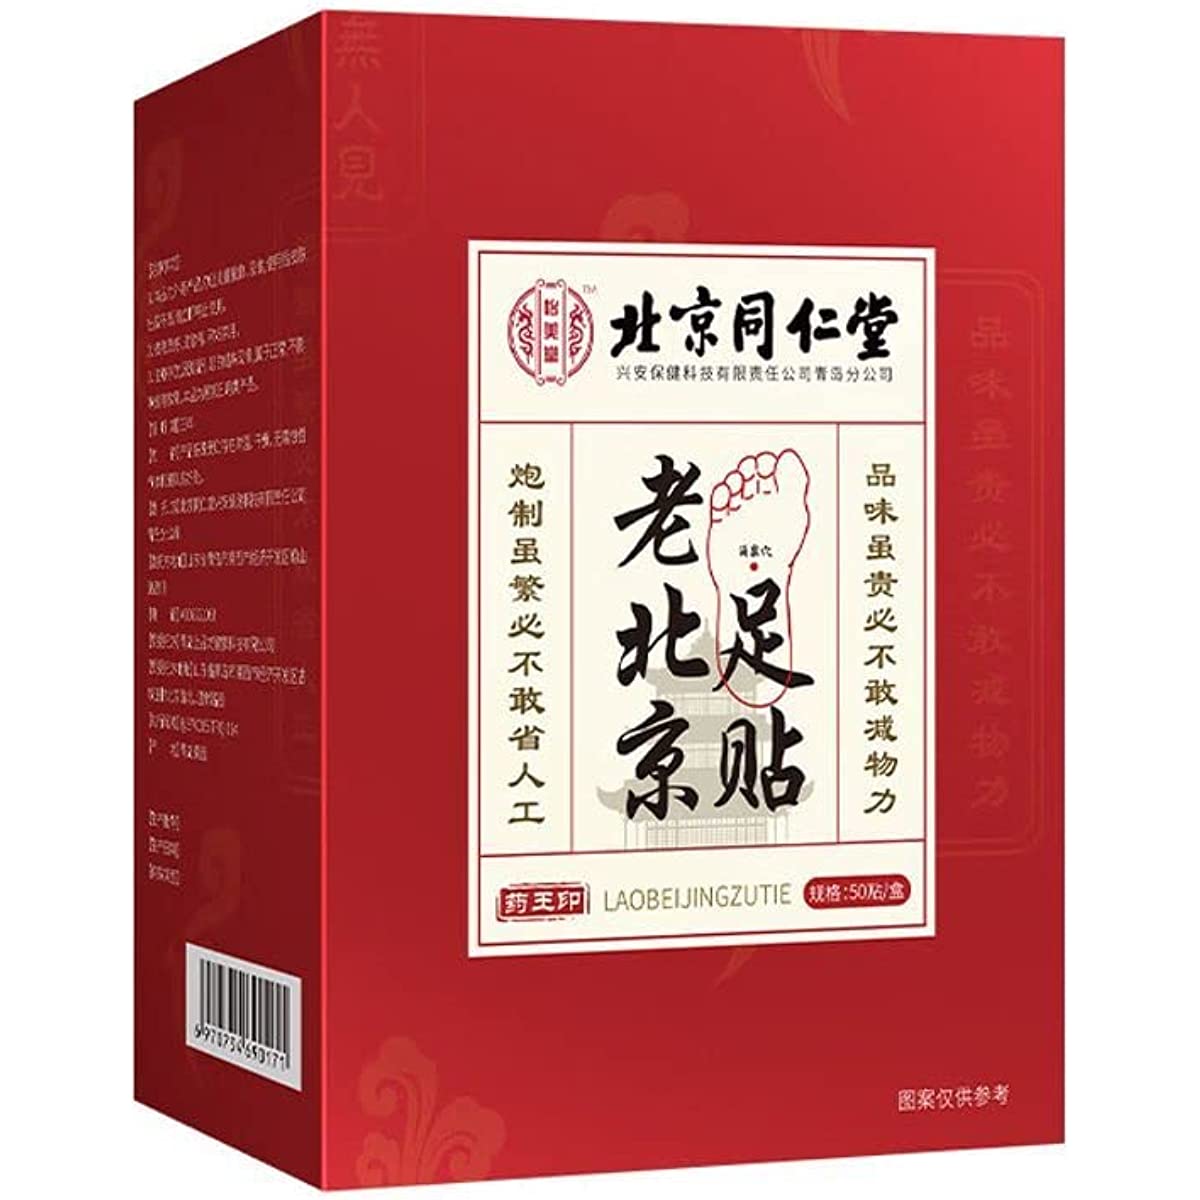 1 Box, Tongrentang LaoBei Jing Aicao Zutie 50 Plasters/Box 老北京艾贴